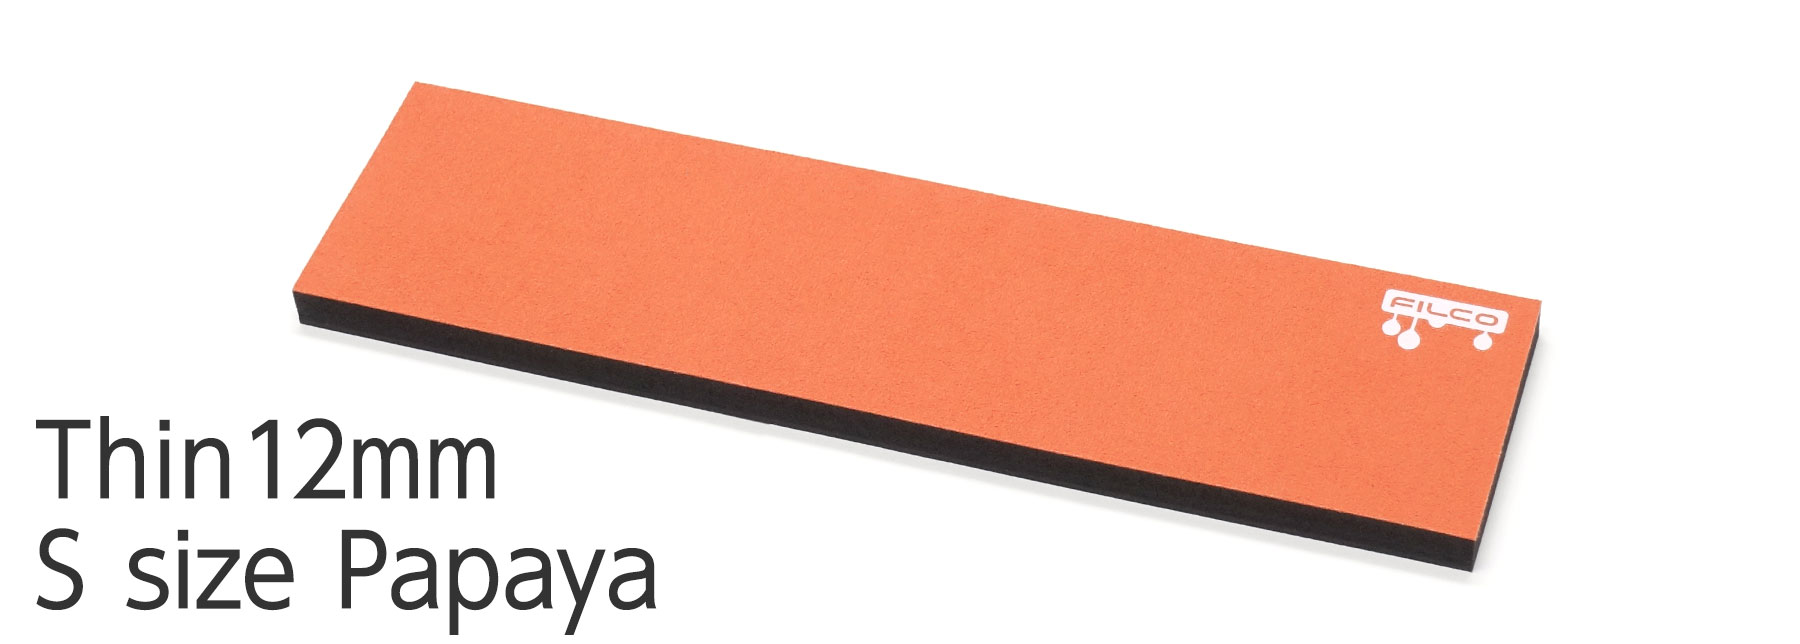 FILCO Majestouch Wrist Rest "Macaron" Thin 12mm / S size / Papaya